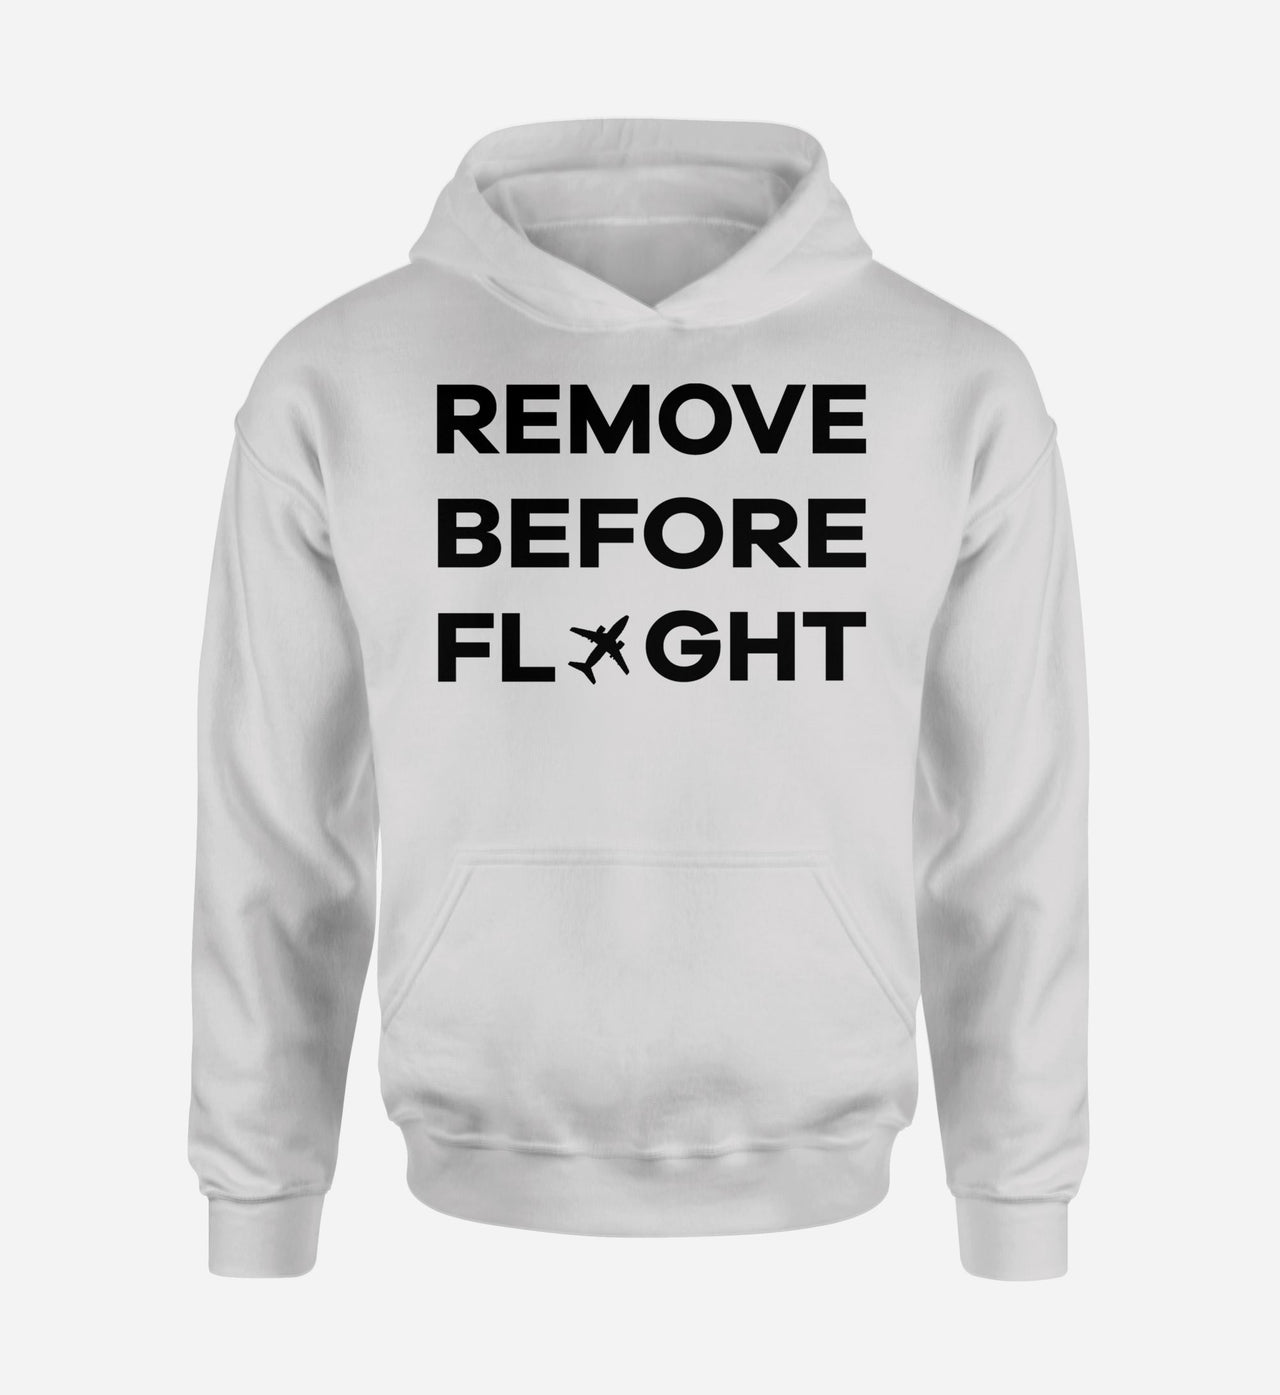 Remove Before Flight Designed Hoodies